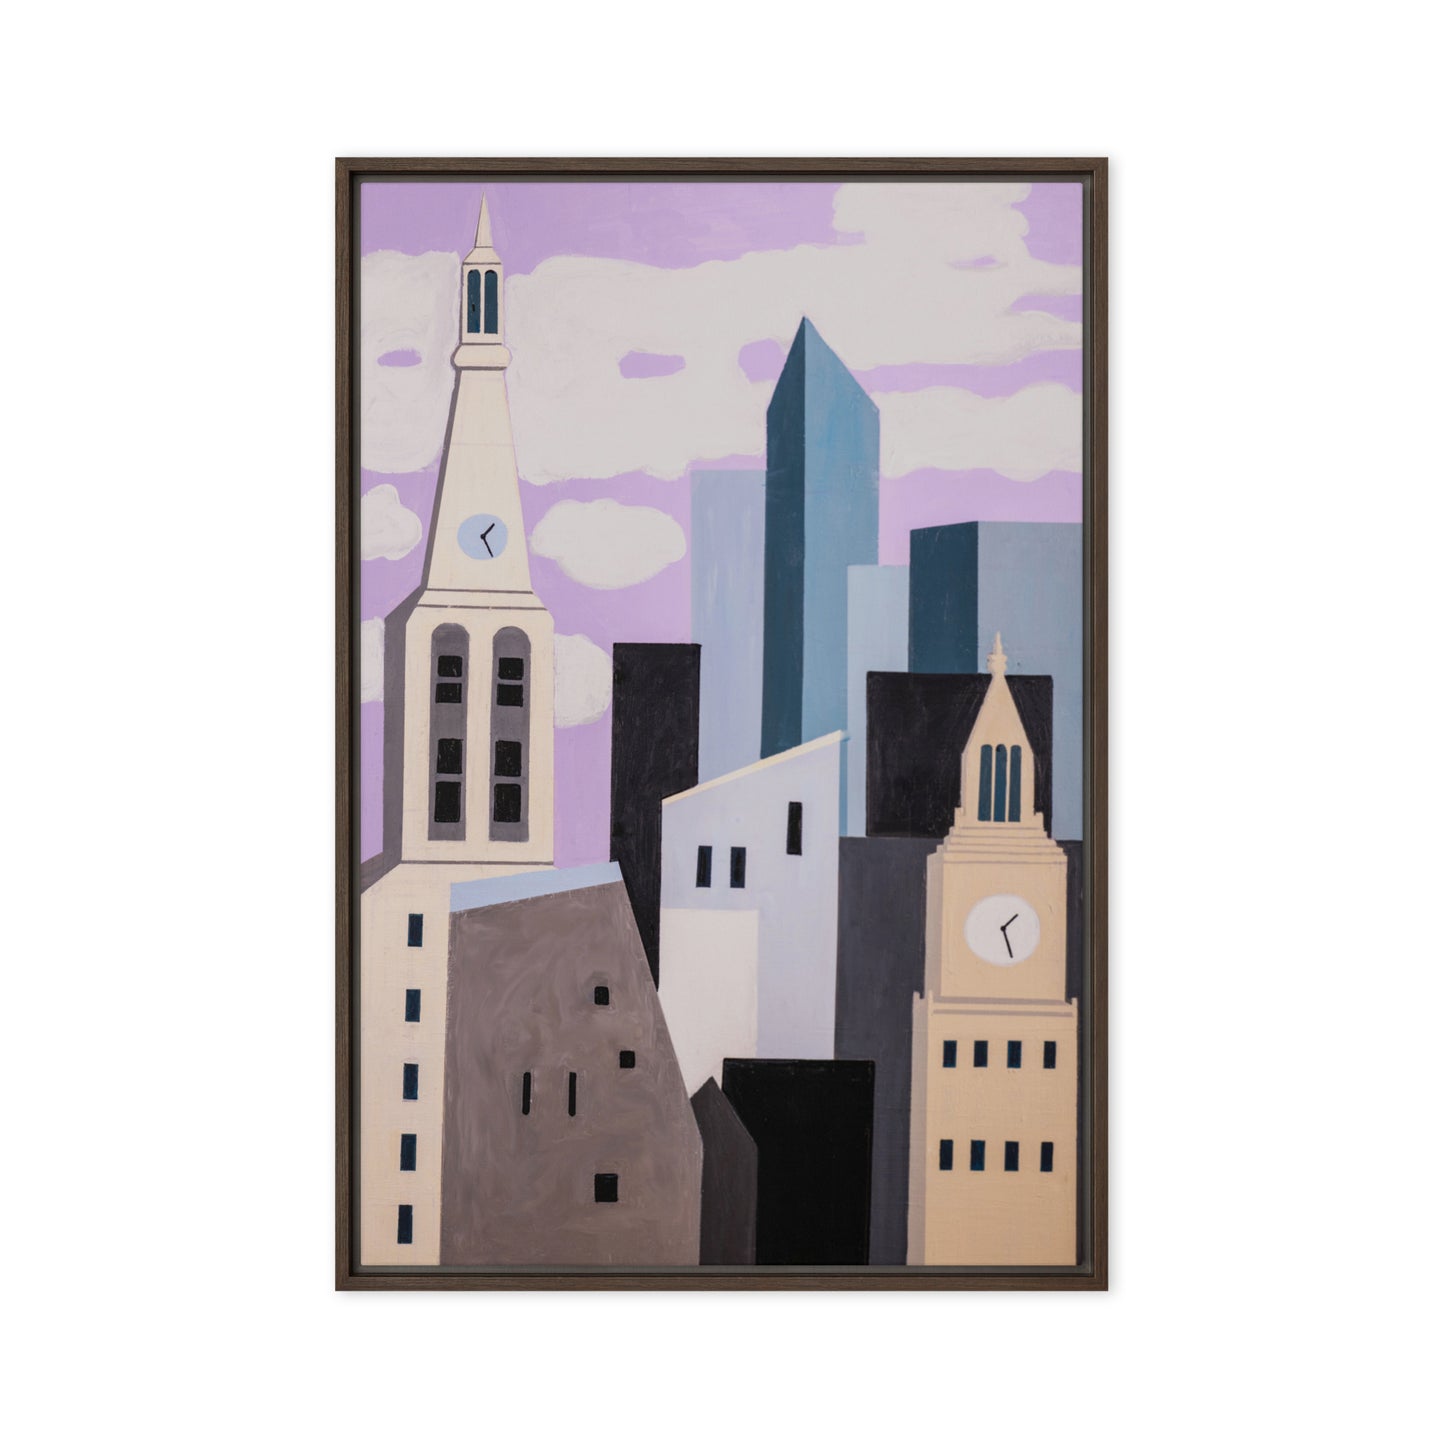 New York Midtown with Clocktowers- Framed canvas